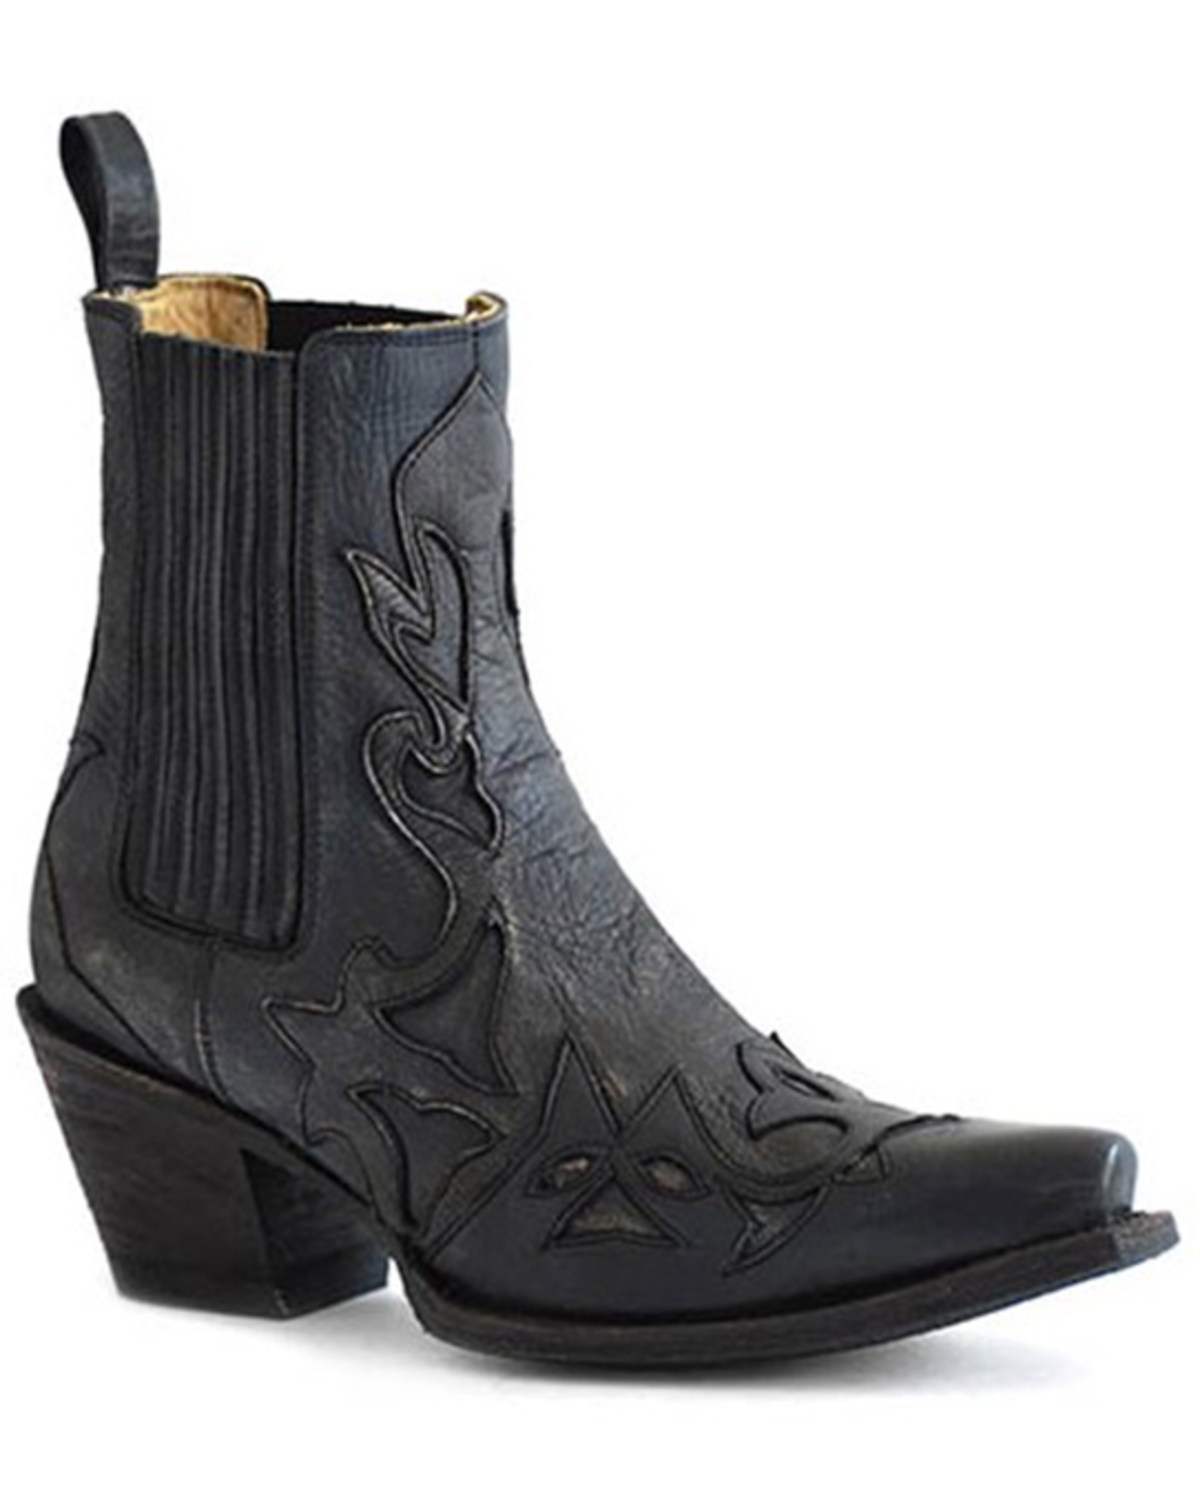 Stetson Women's Cici Western Boots - Snip Toe